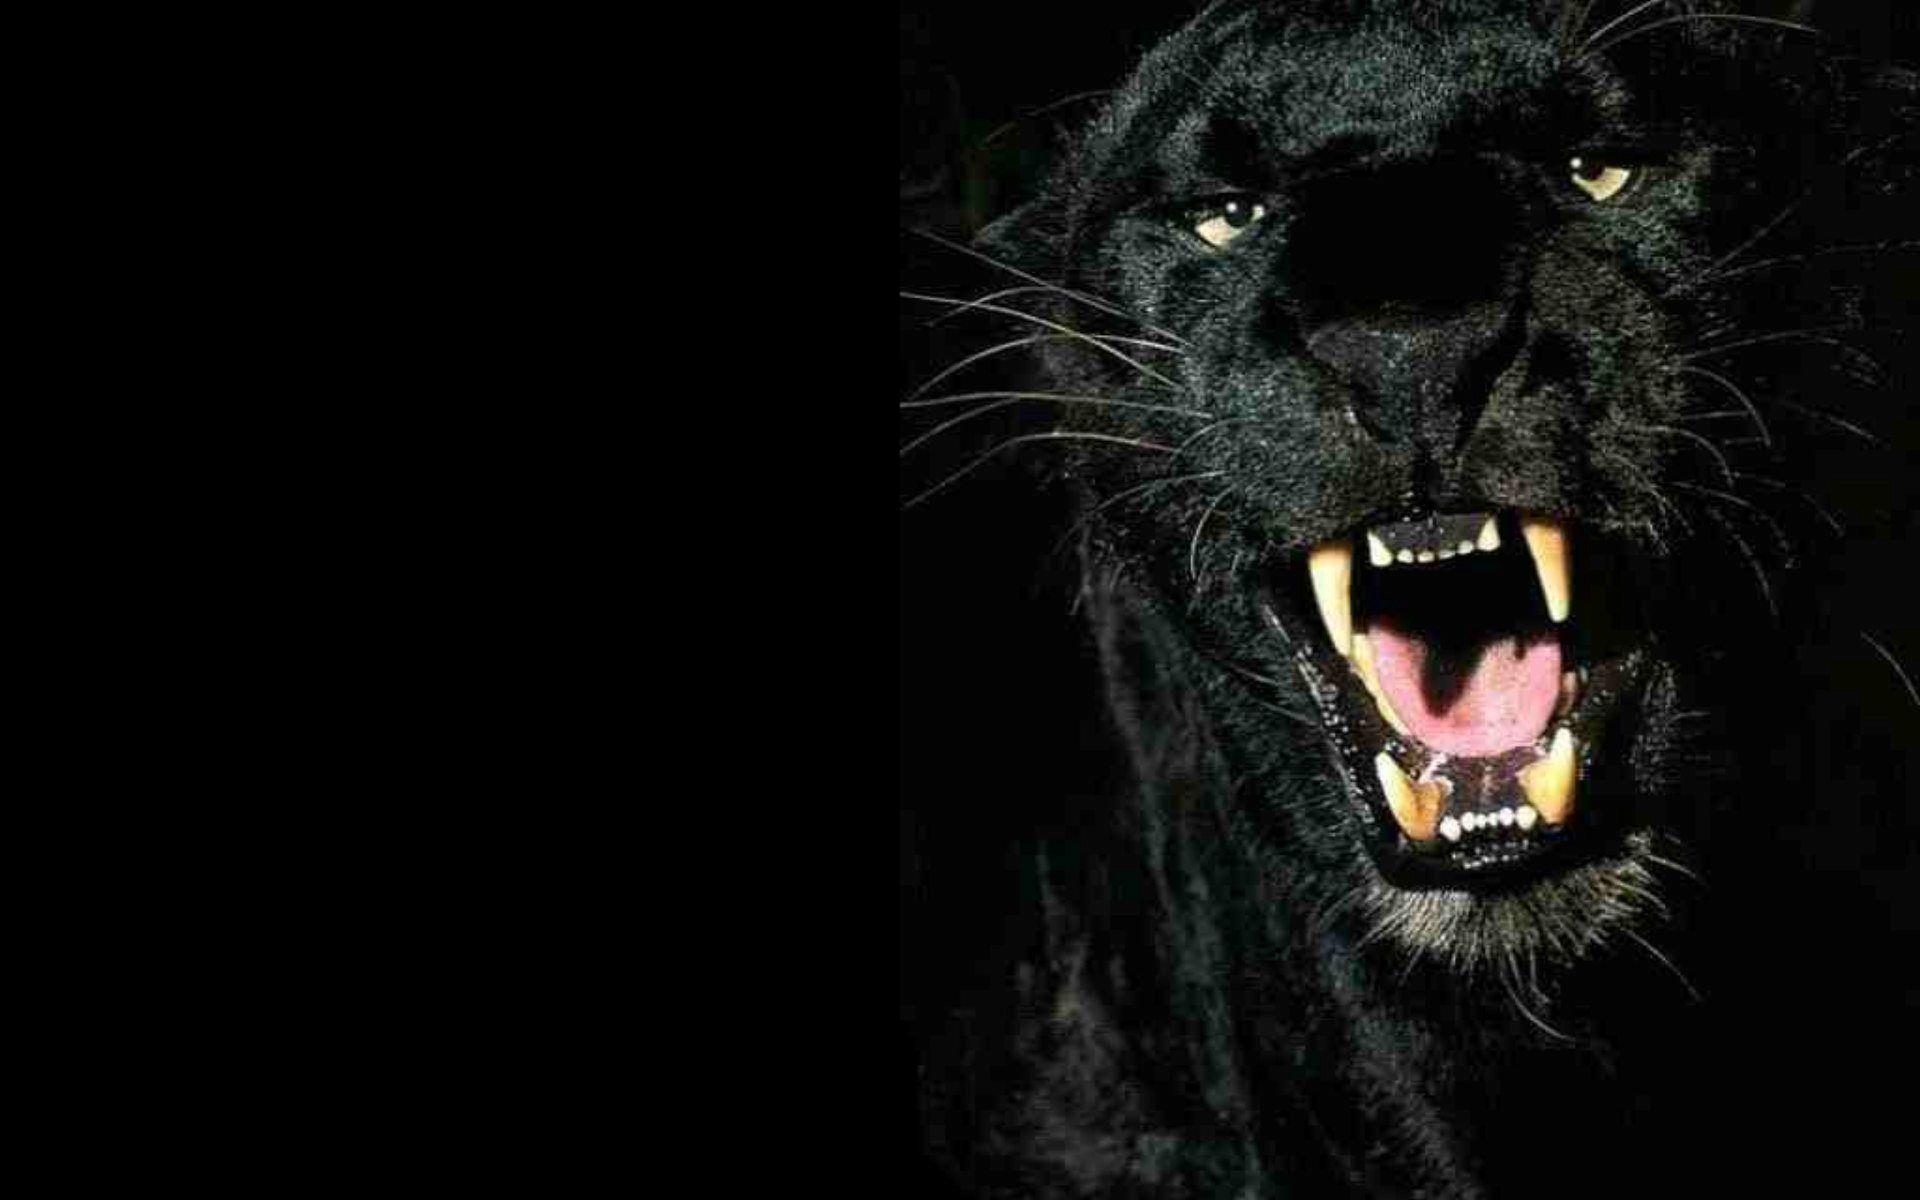 Black Panther Full HD Quality Image, Black Panther Wallpaper